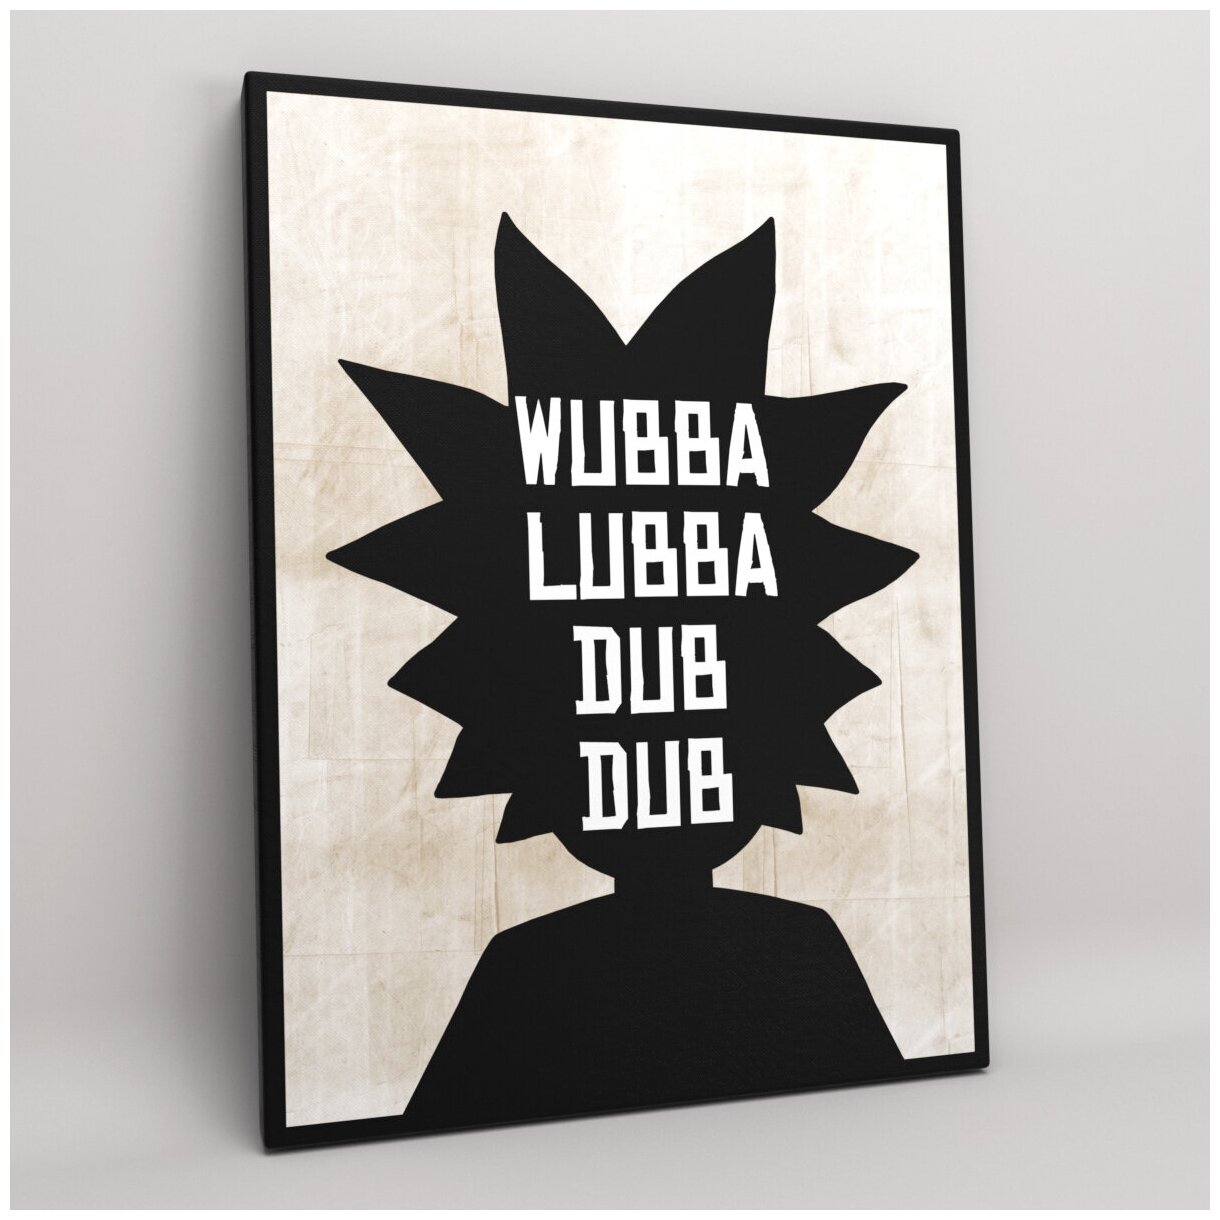 Интерьерный постер (картина) "Рик и Морти. Wubba lubba dub dub" на холсте с подрамником размер 30х40